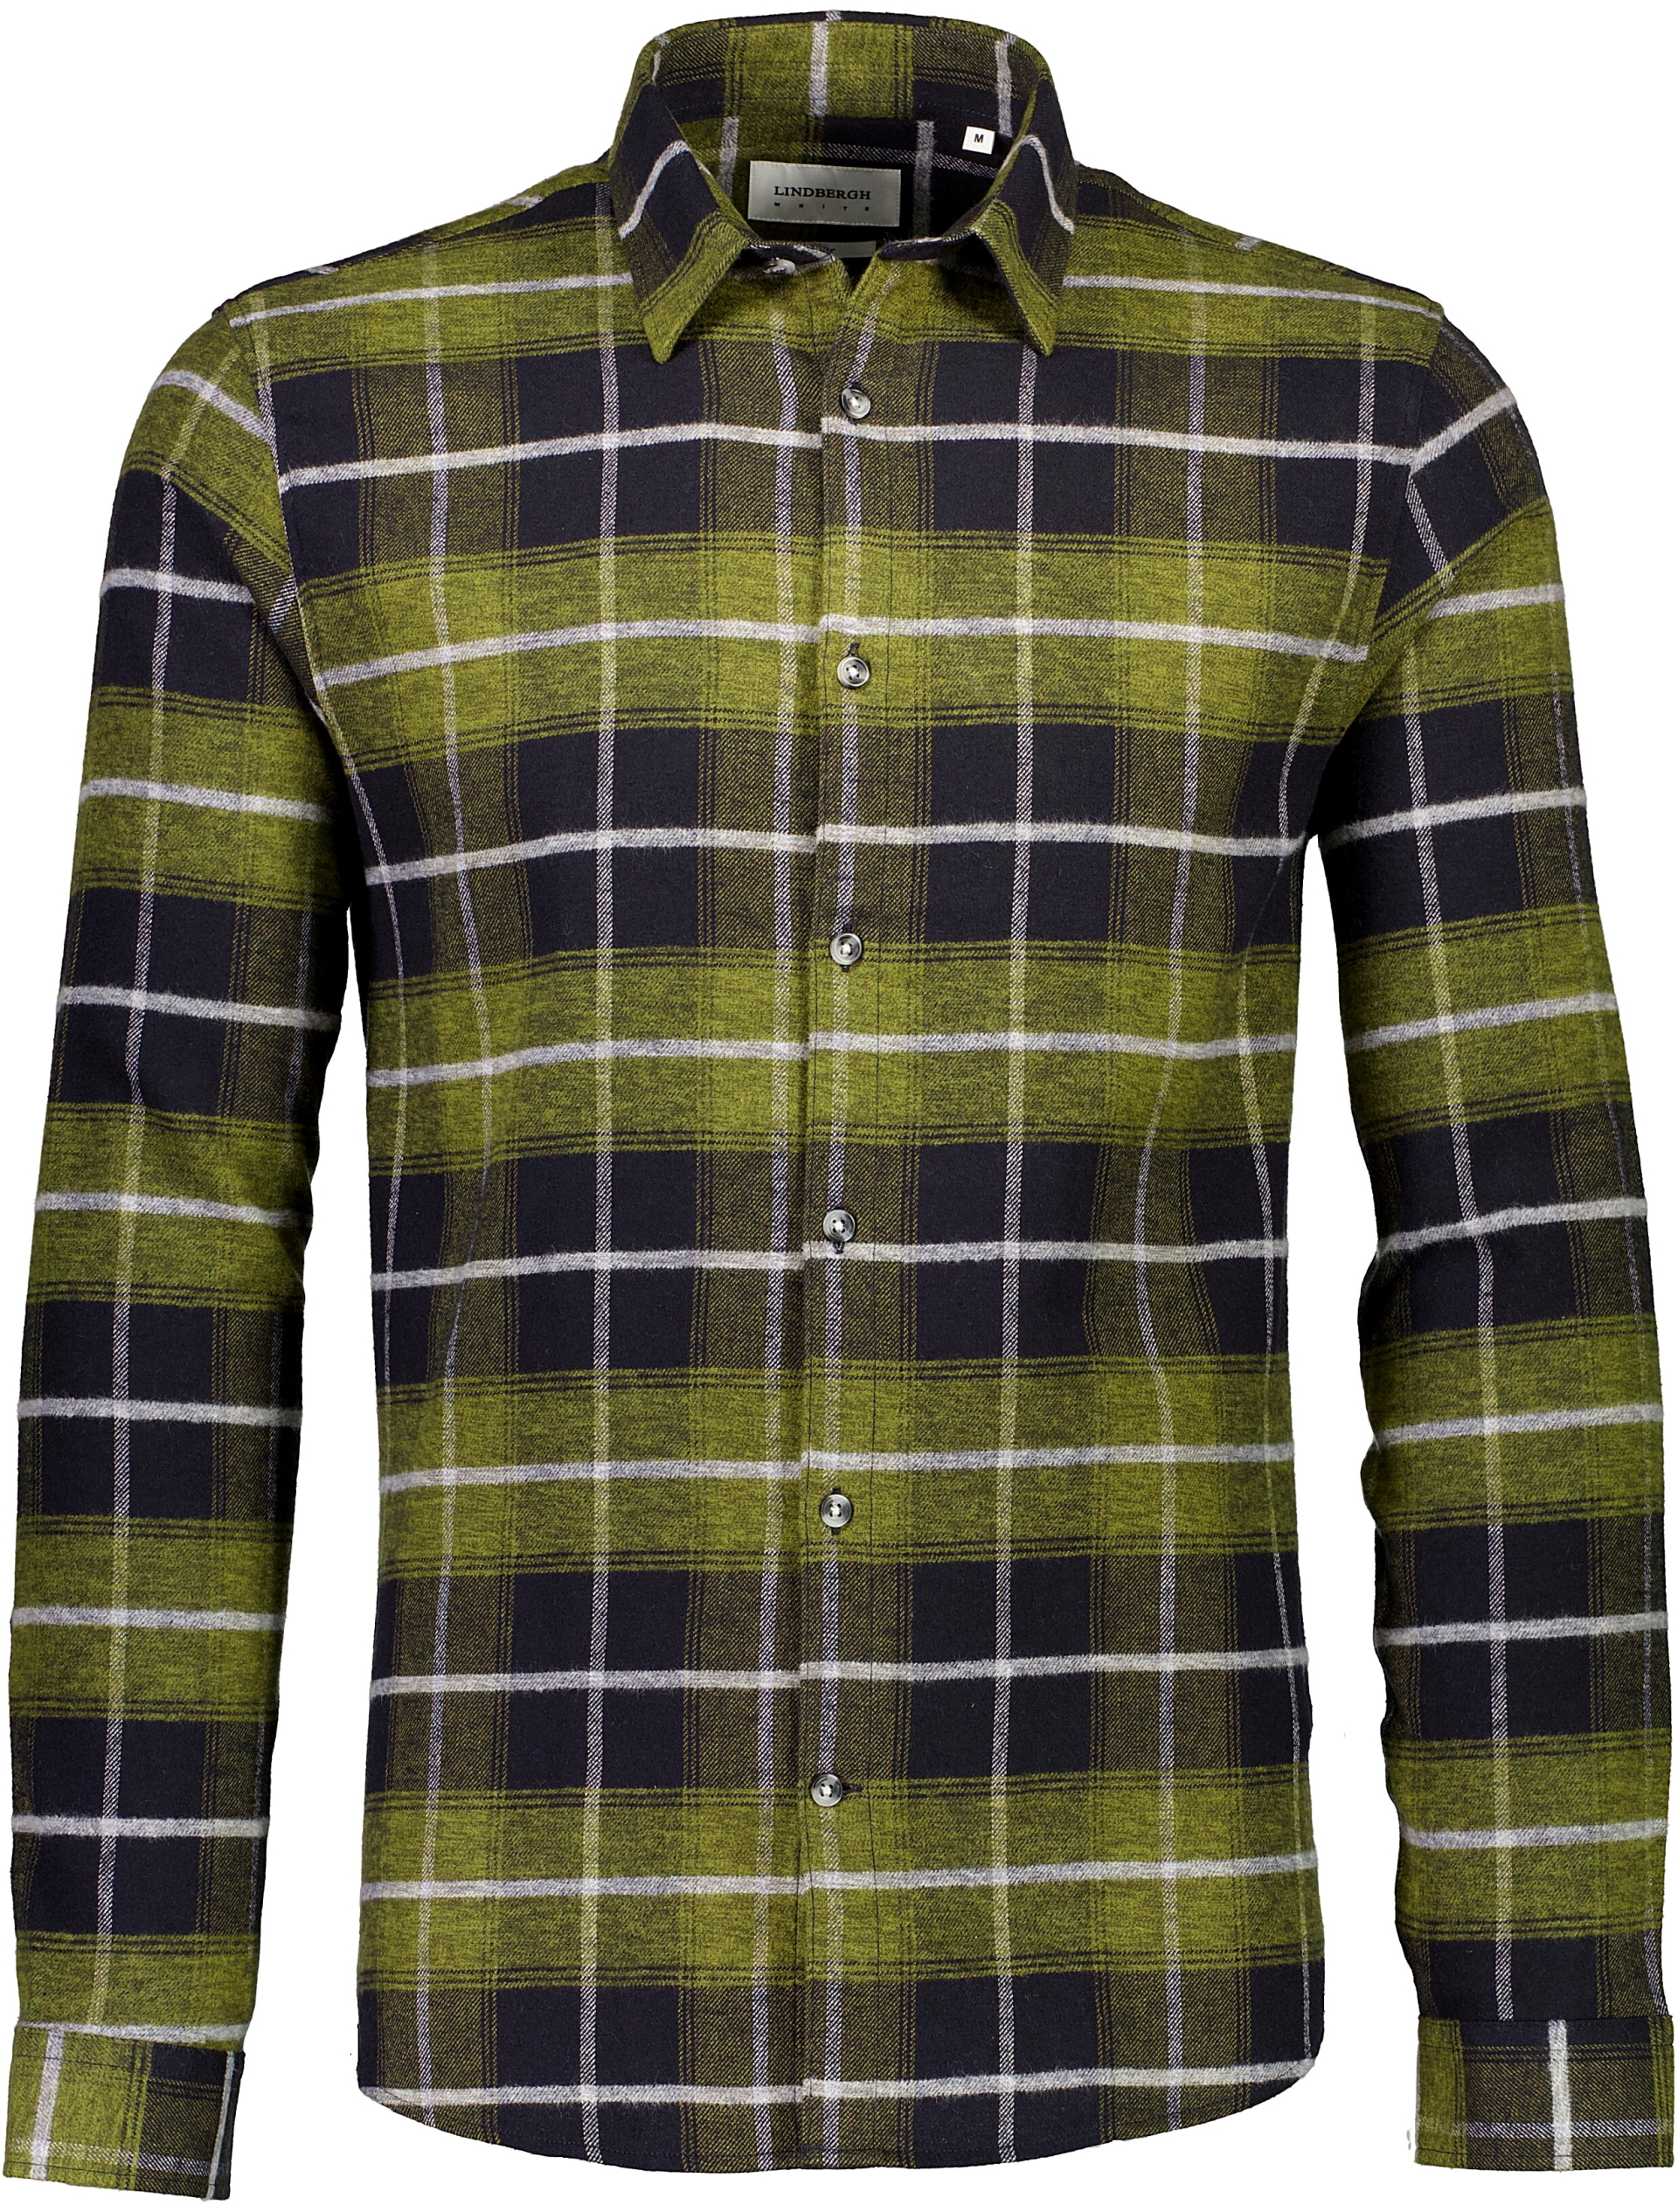 Lindbergh Flannel shirt green / army